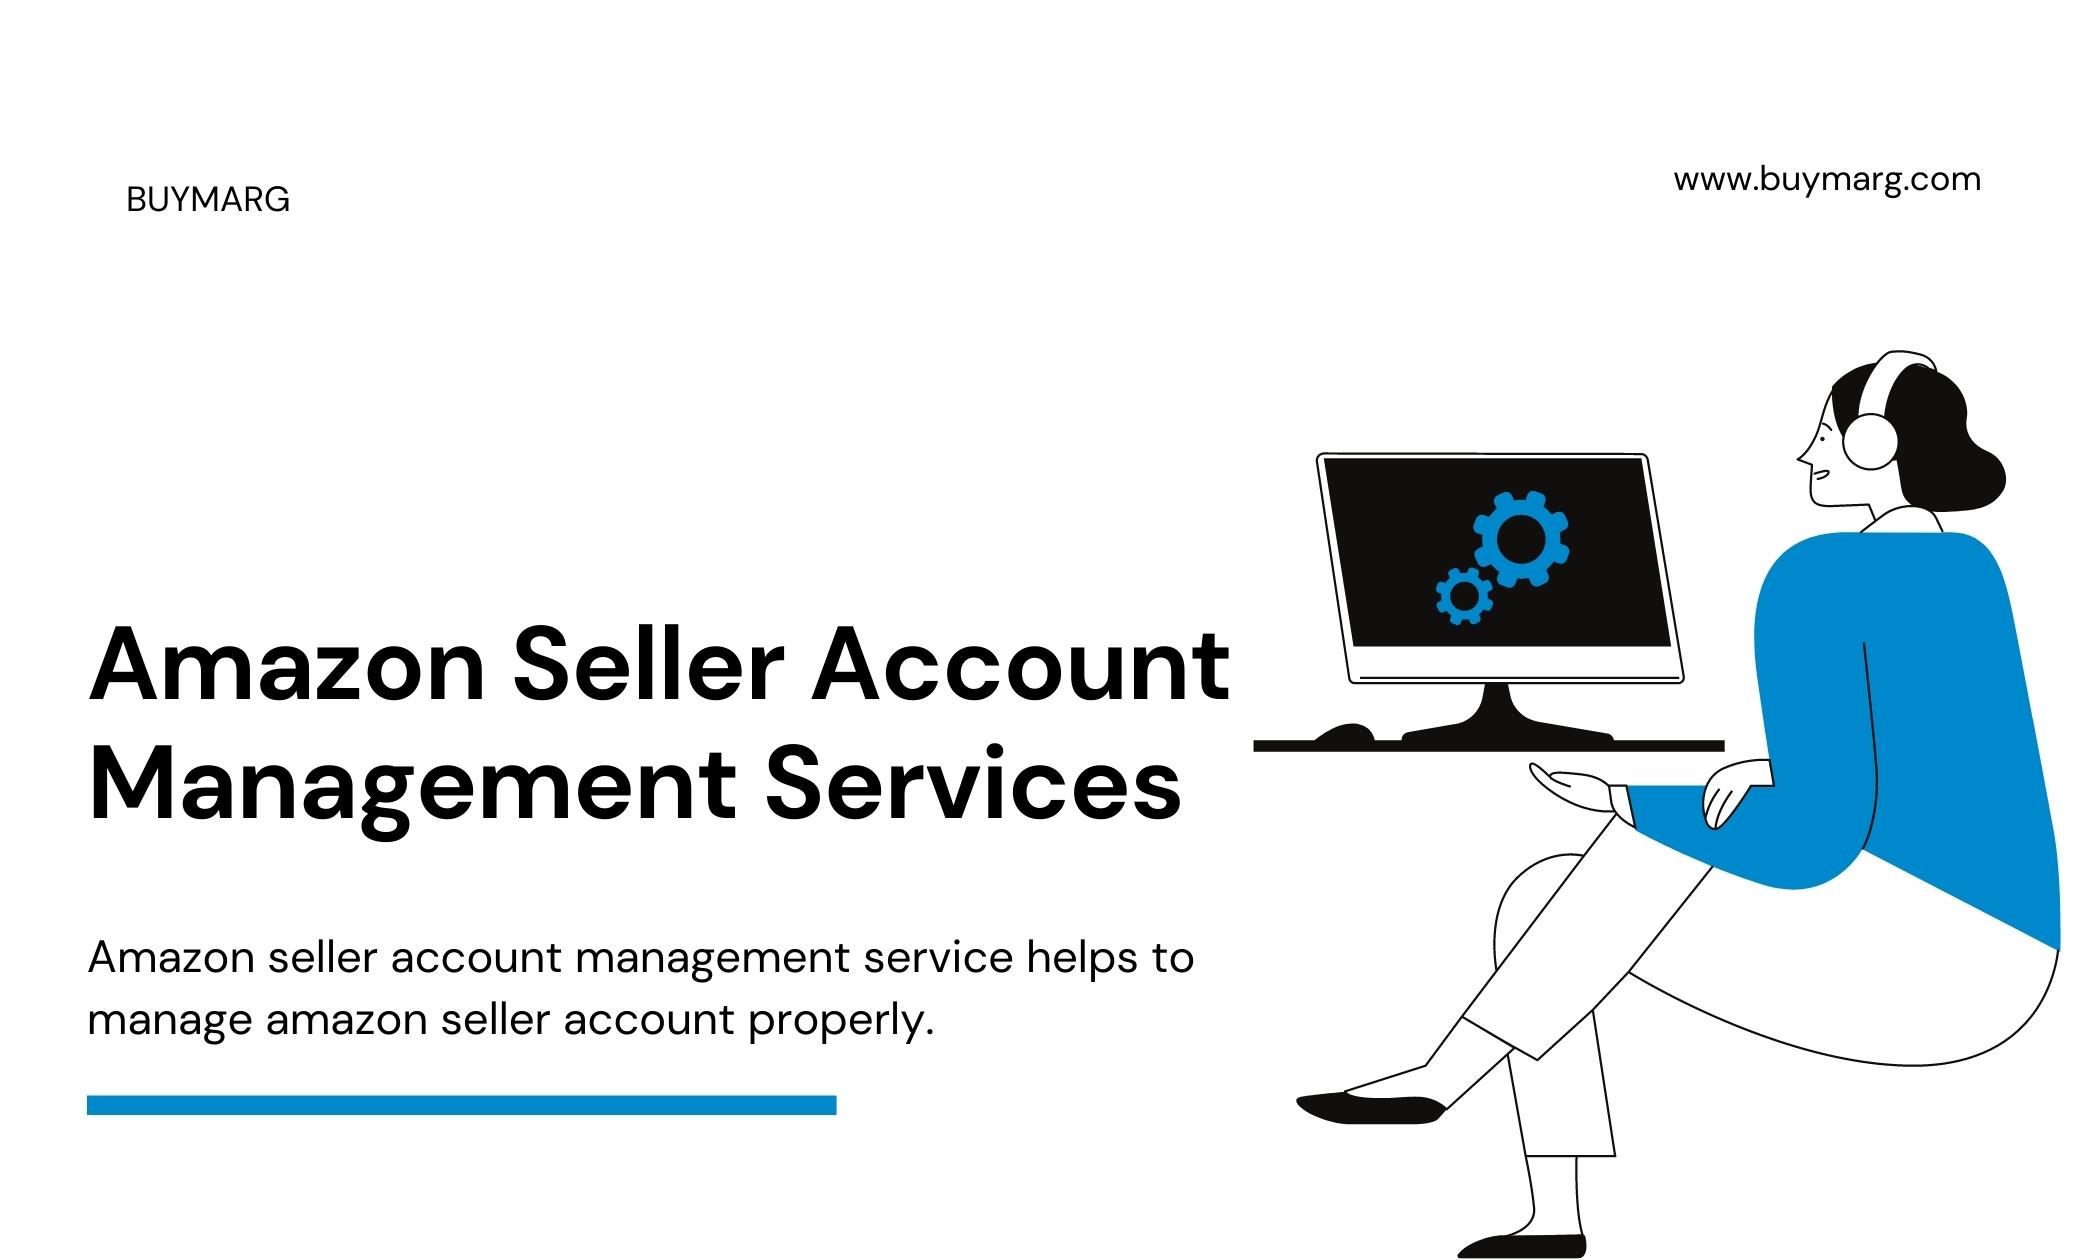 Amazon Seller Account Management Services